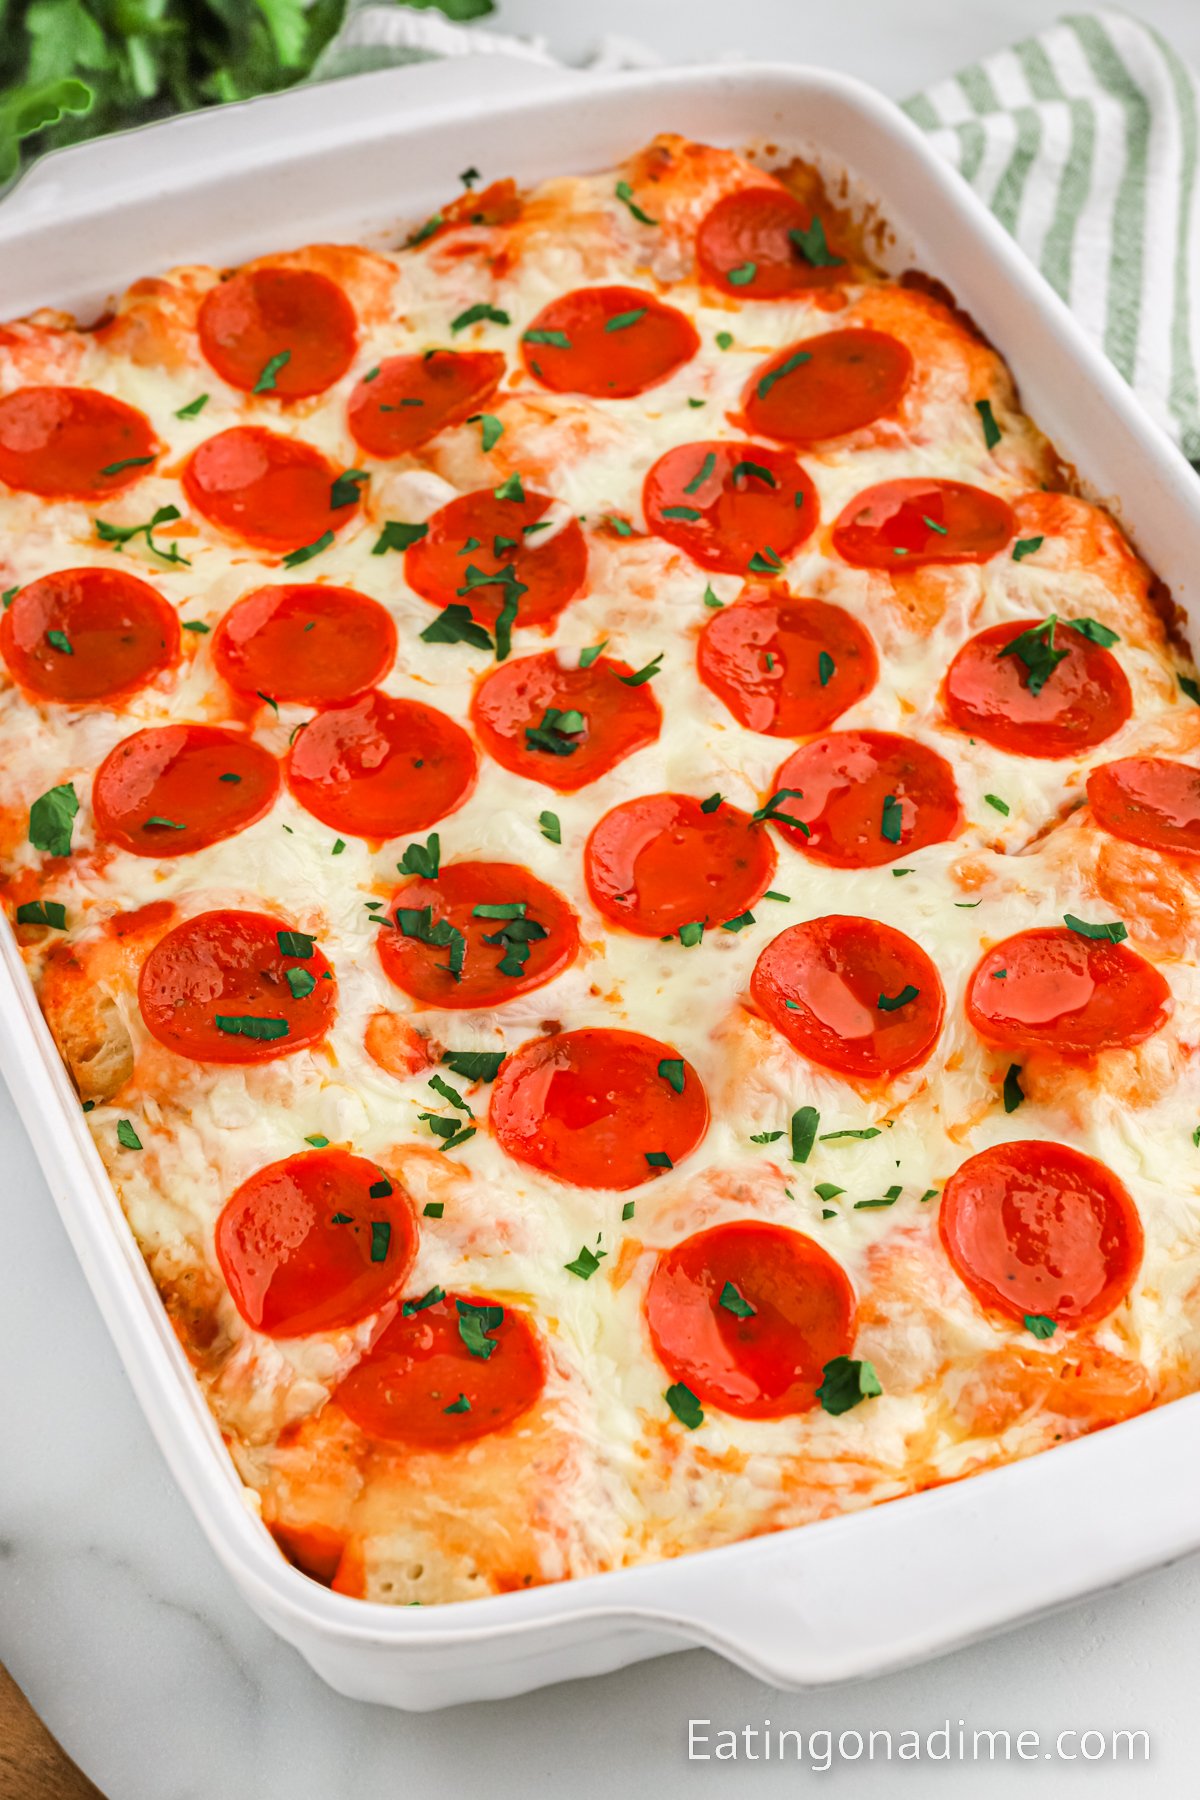 https://www.eatingonadime.com/wp-content/uploads/2020/01/1200x1800-Bubble-Up-Pizza-8.jpg